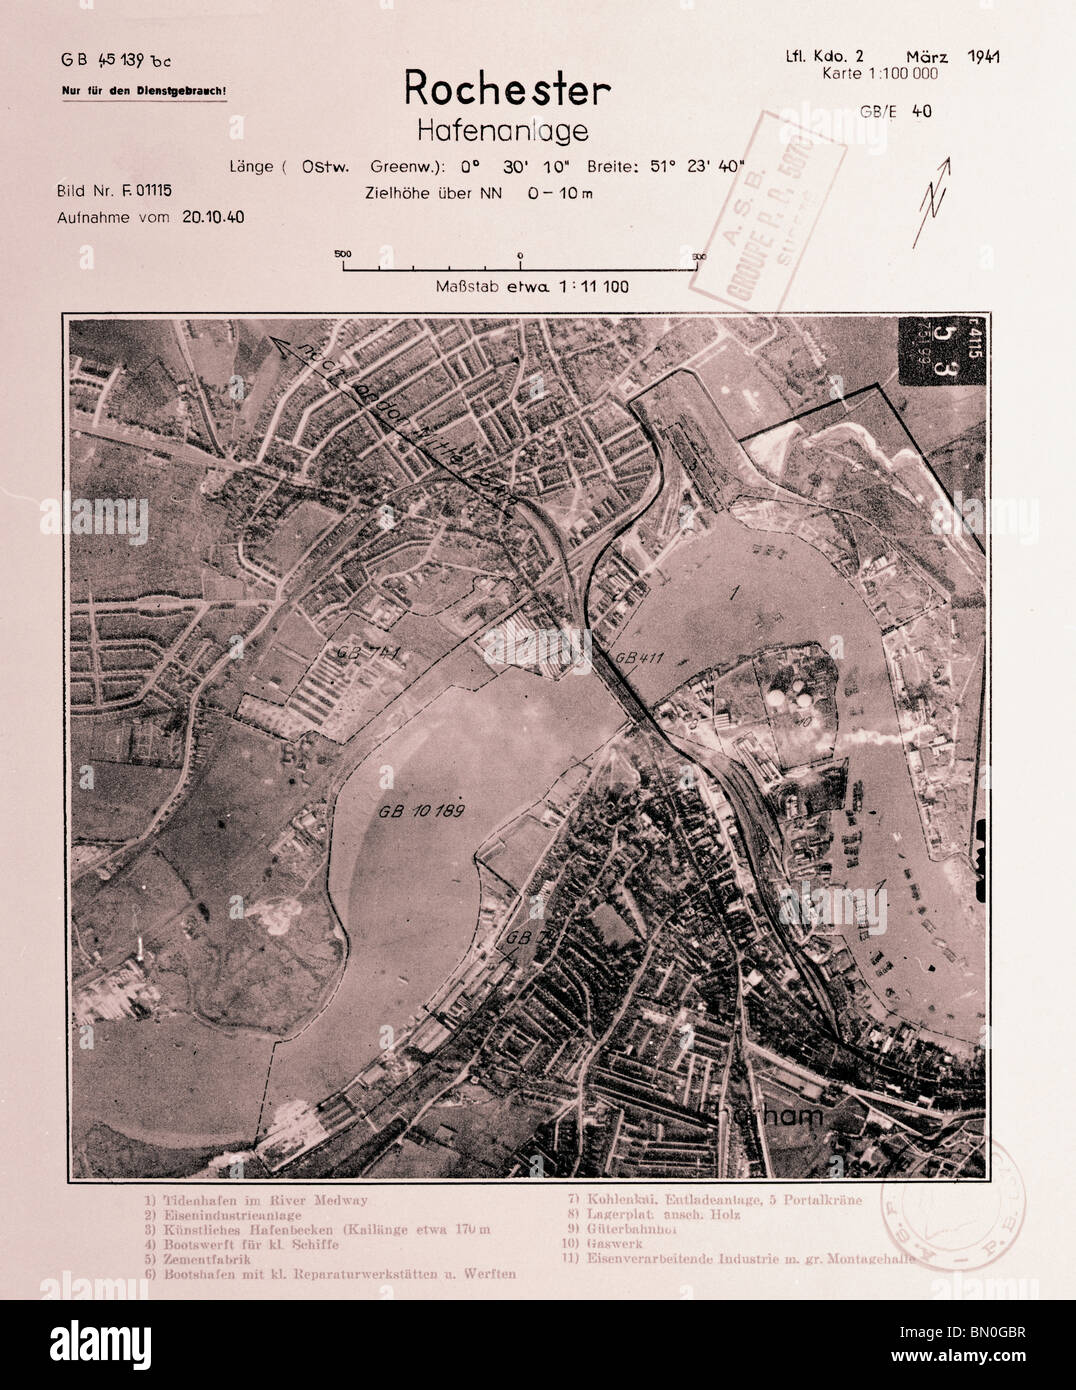 Rochester - Kent 1940 Docks Luftwaffe immagine aerea Foto Stock